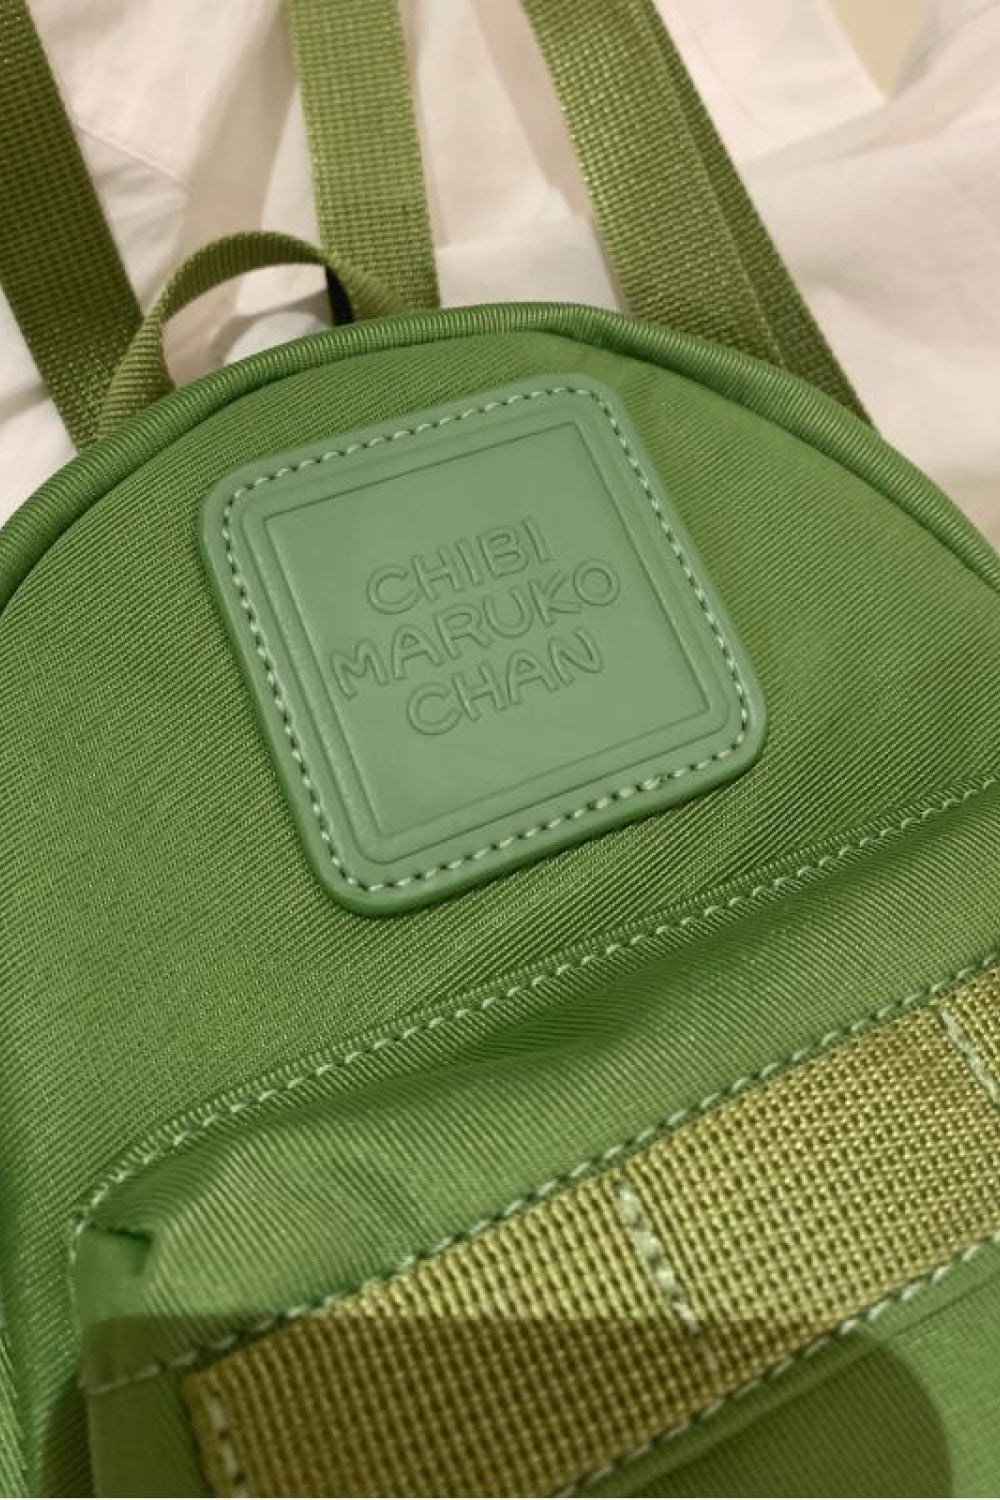 Small Canvas Backpack - Handbag - FITGGINS